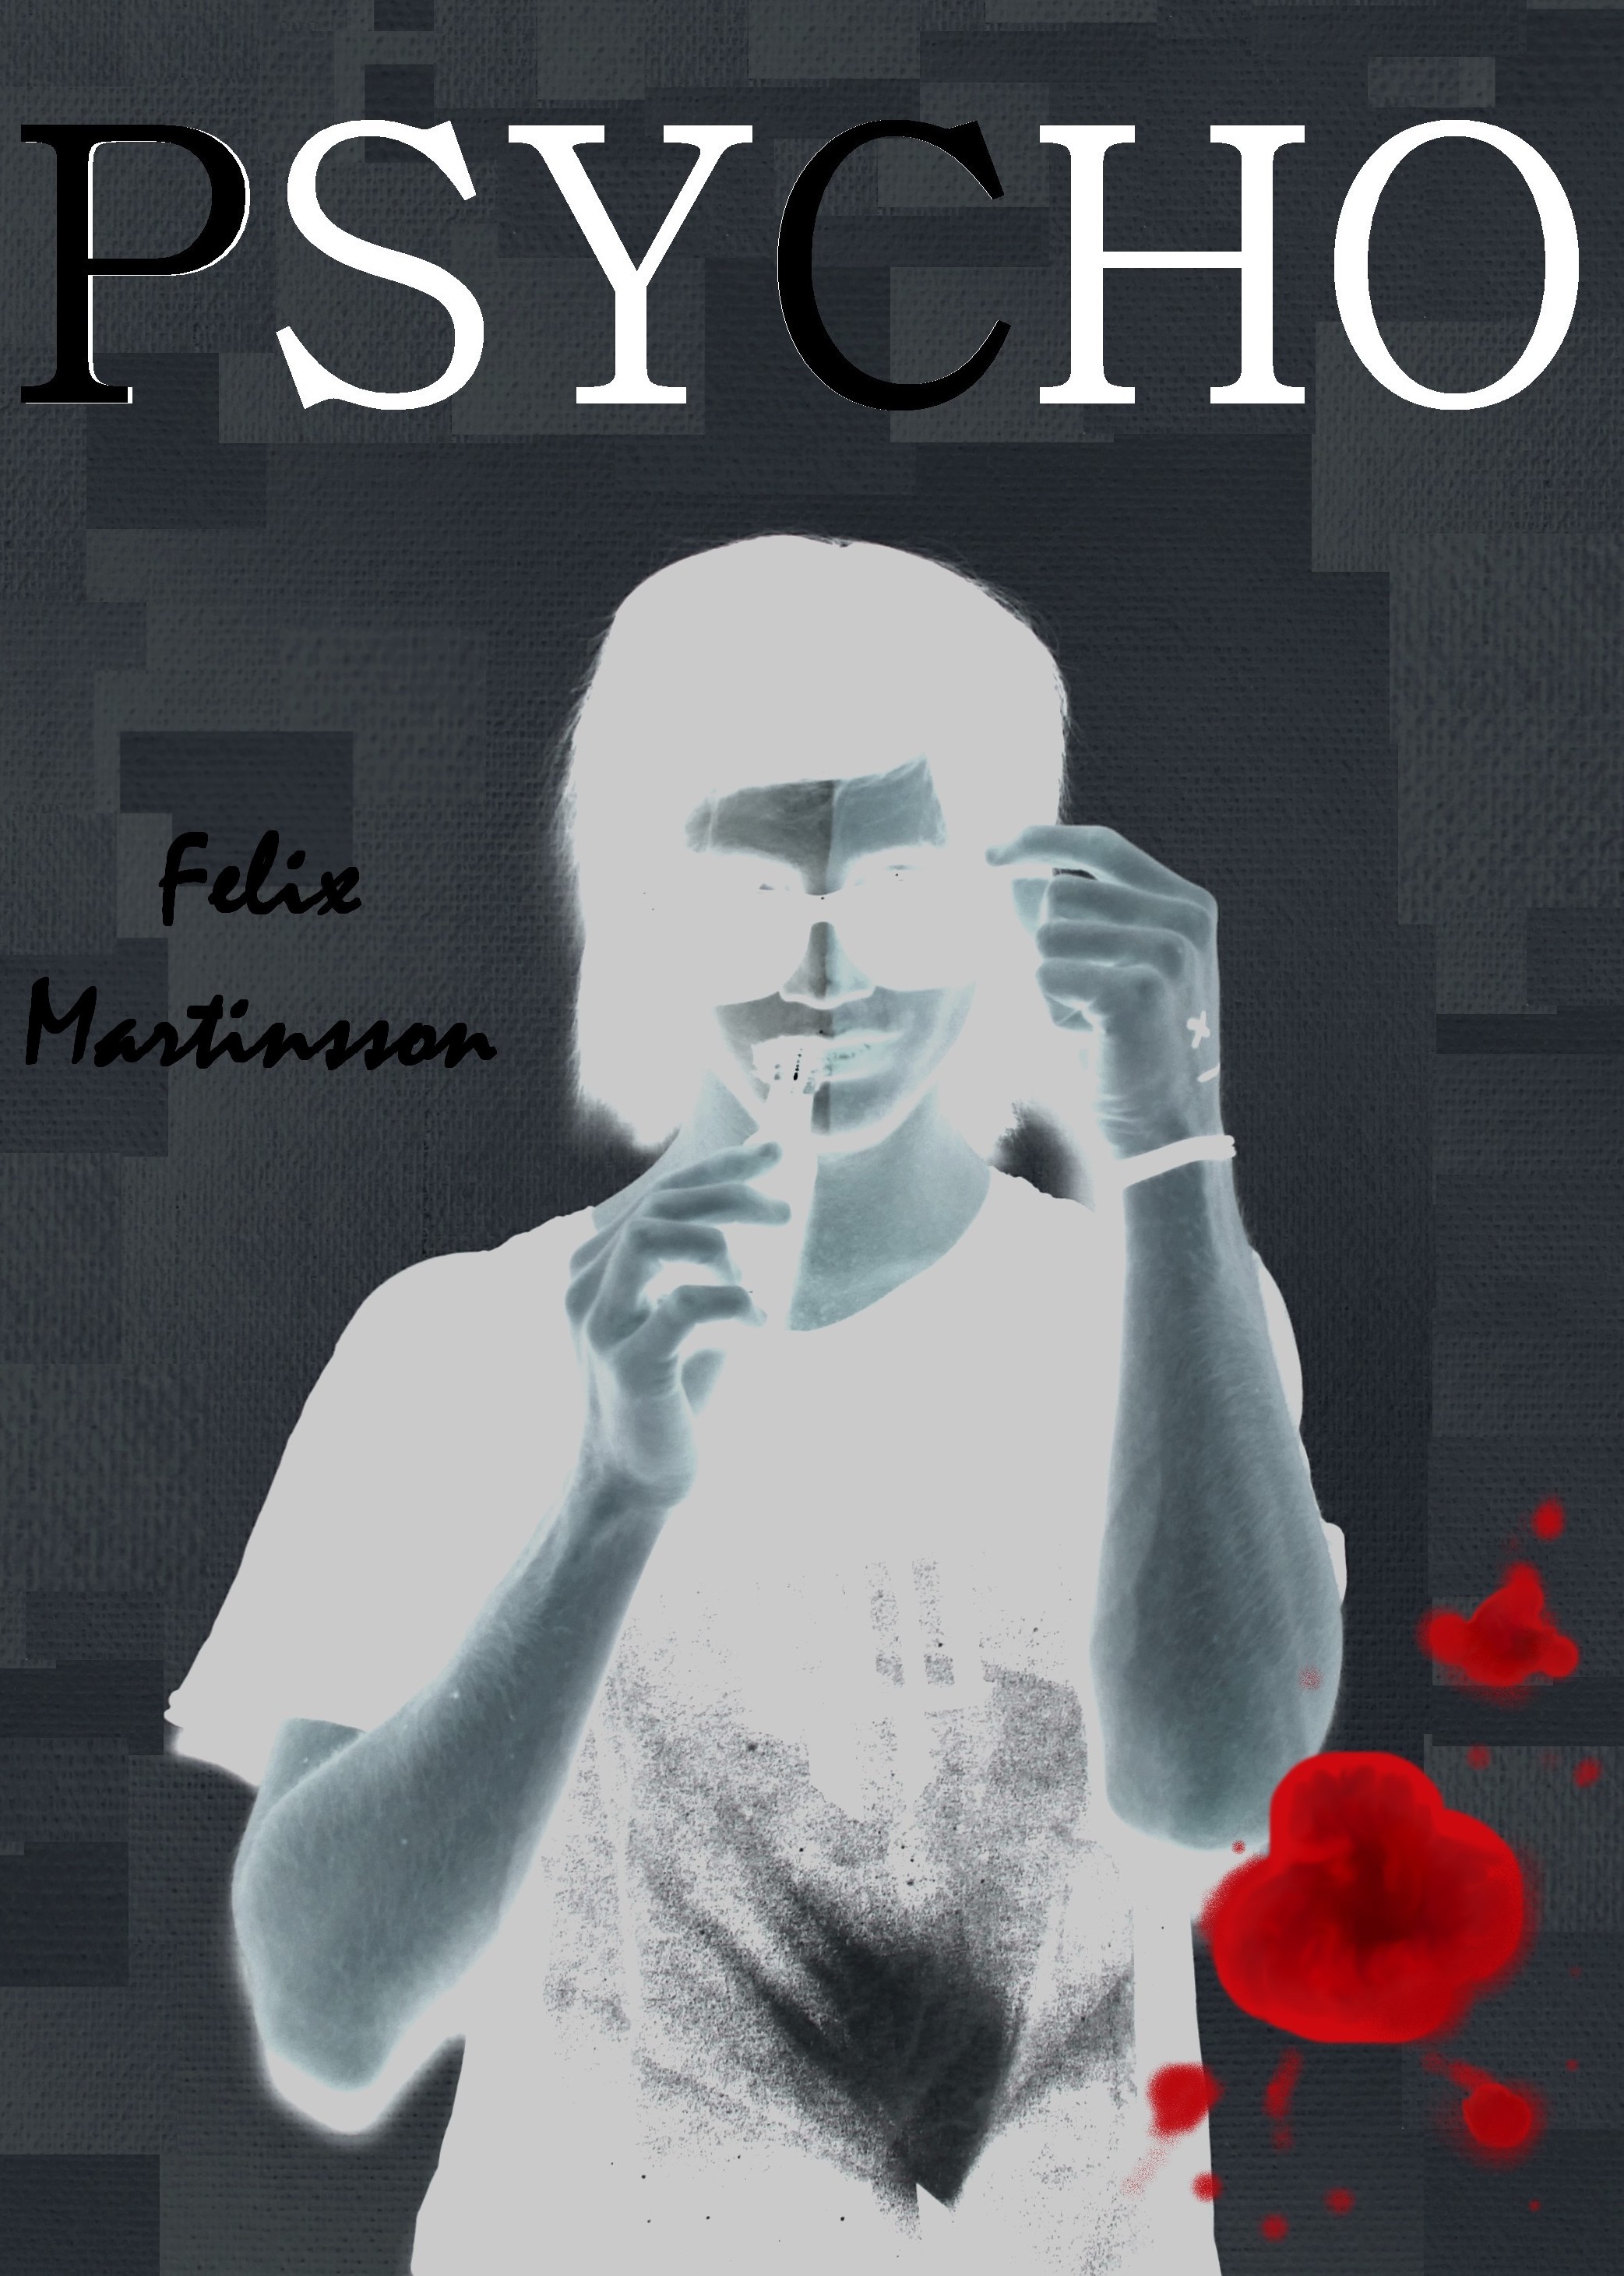 Felix Martinsson - Psycho (cover)